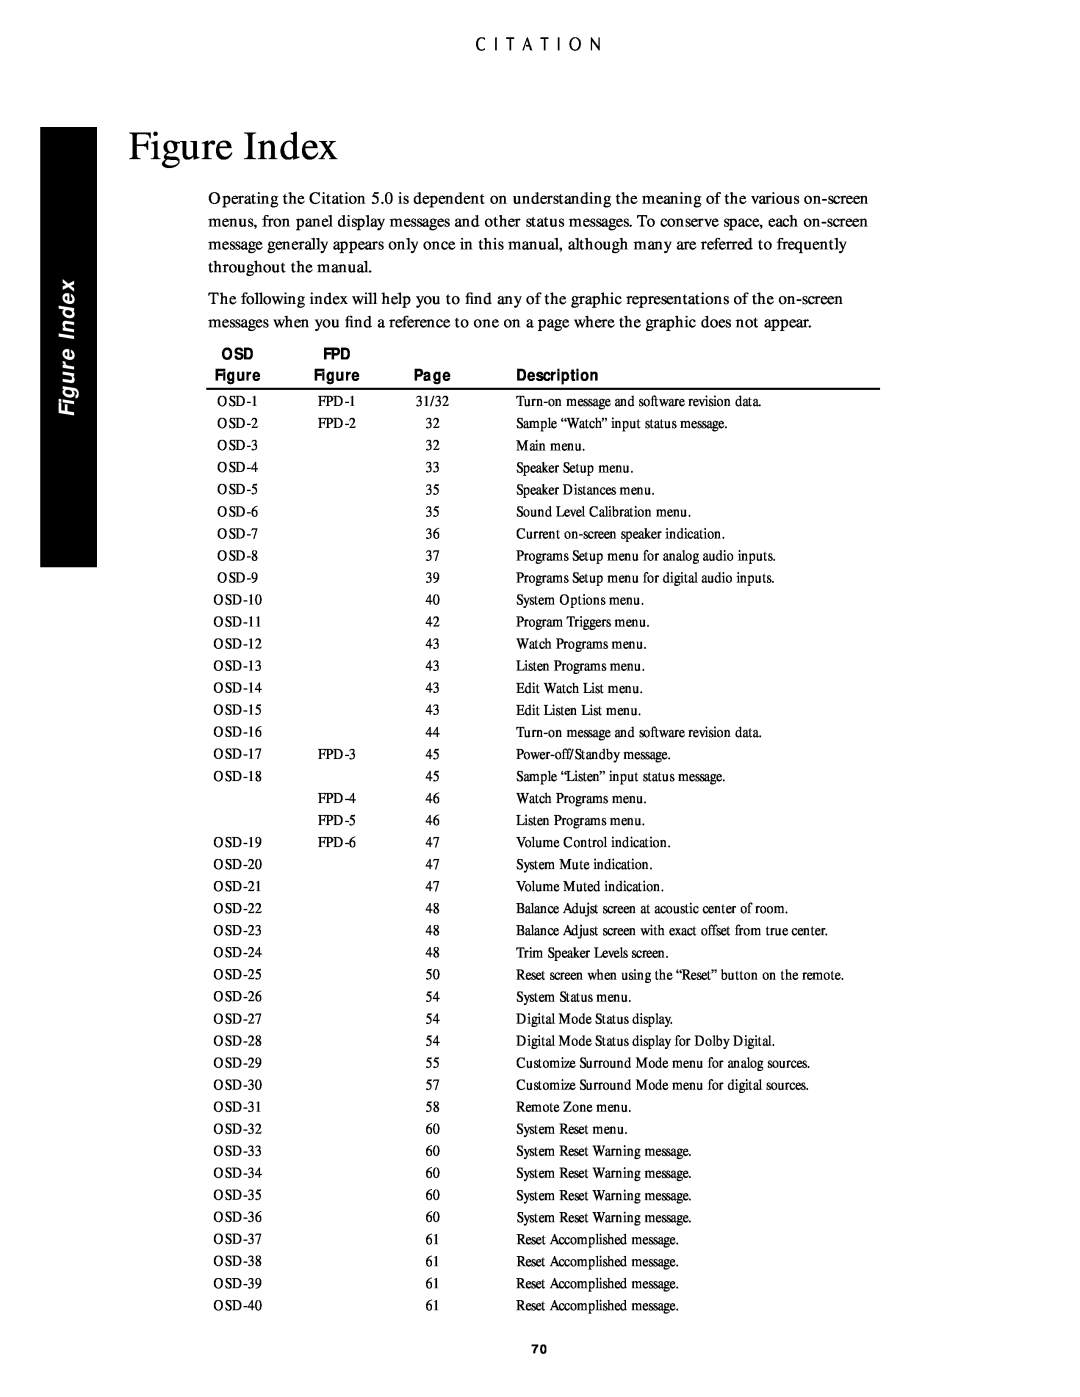 Citation Stereo Receiver owner manual Figure Index, Page, Description 